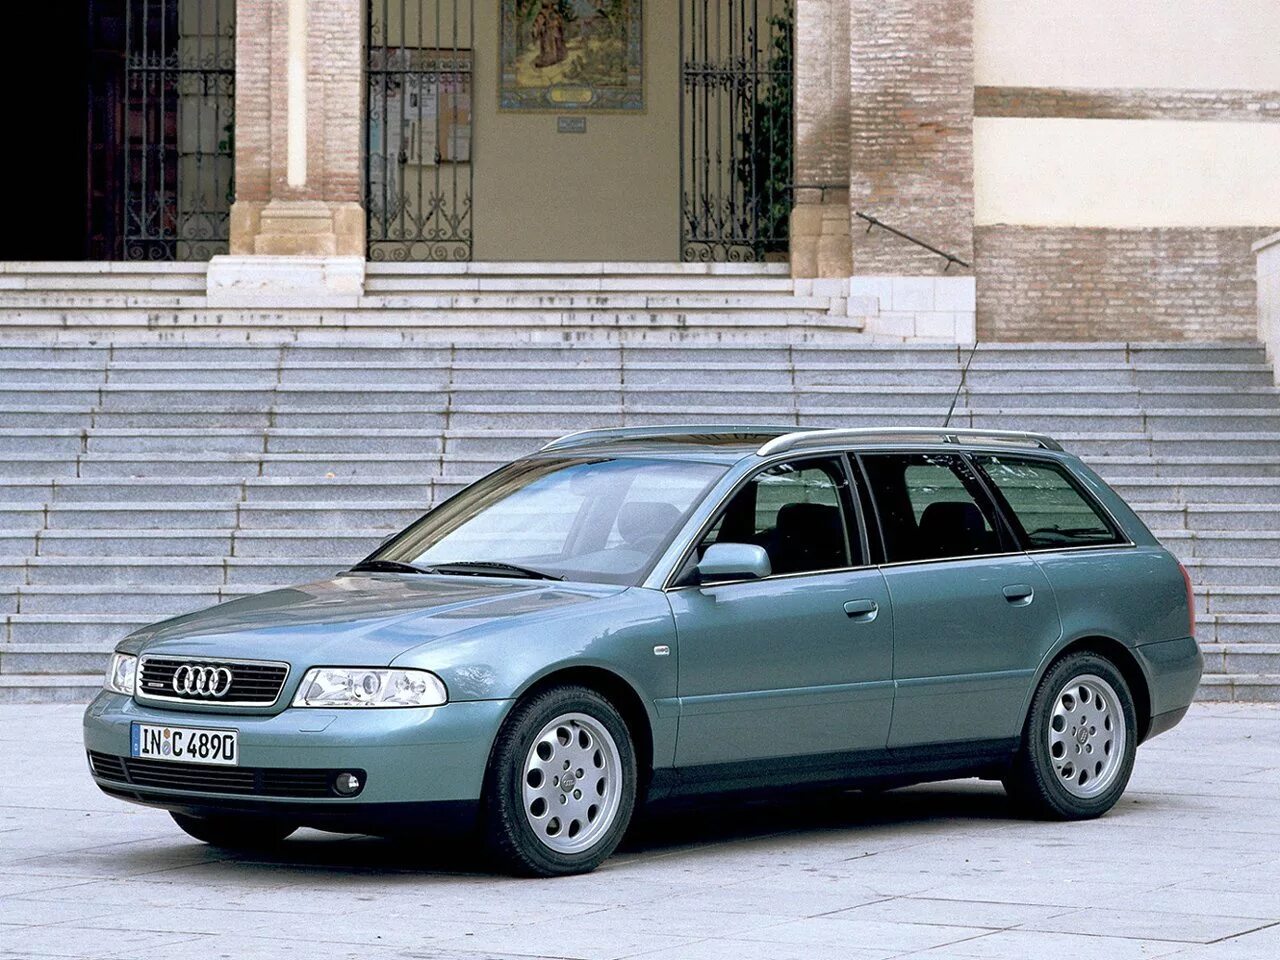 Ауди а4 Авант 2000. Audi a4 универсал 2000. Audi a4 b5 Wagon. Audi a4 2001 универсал.